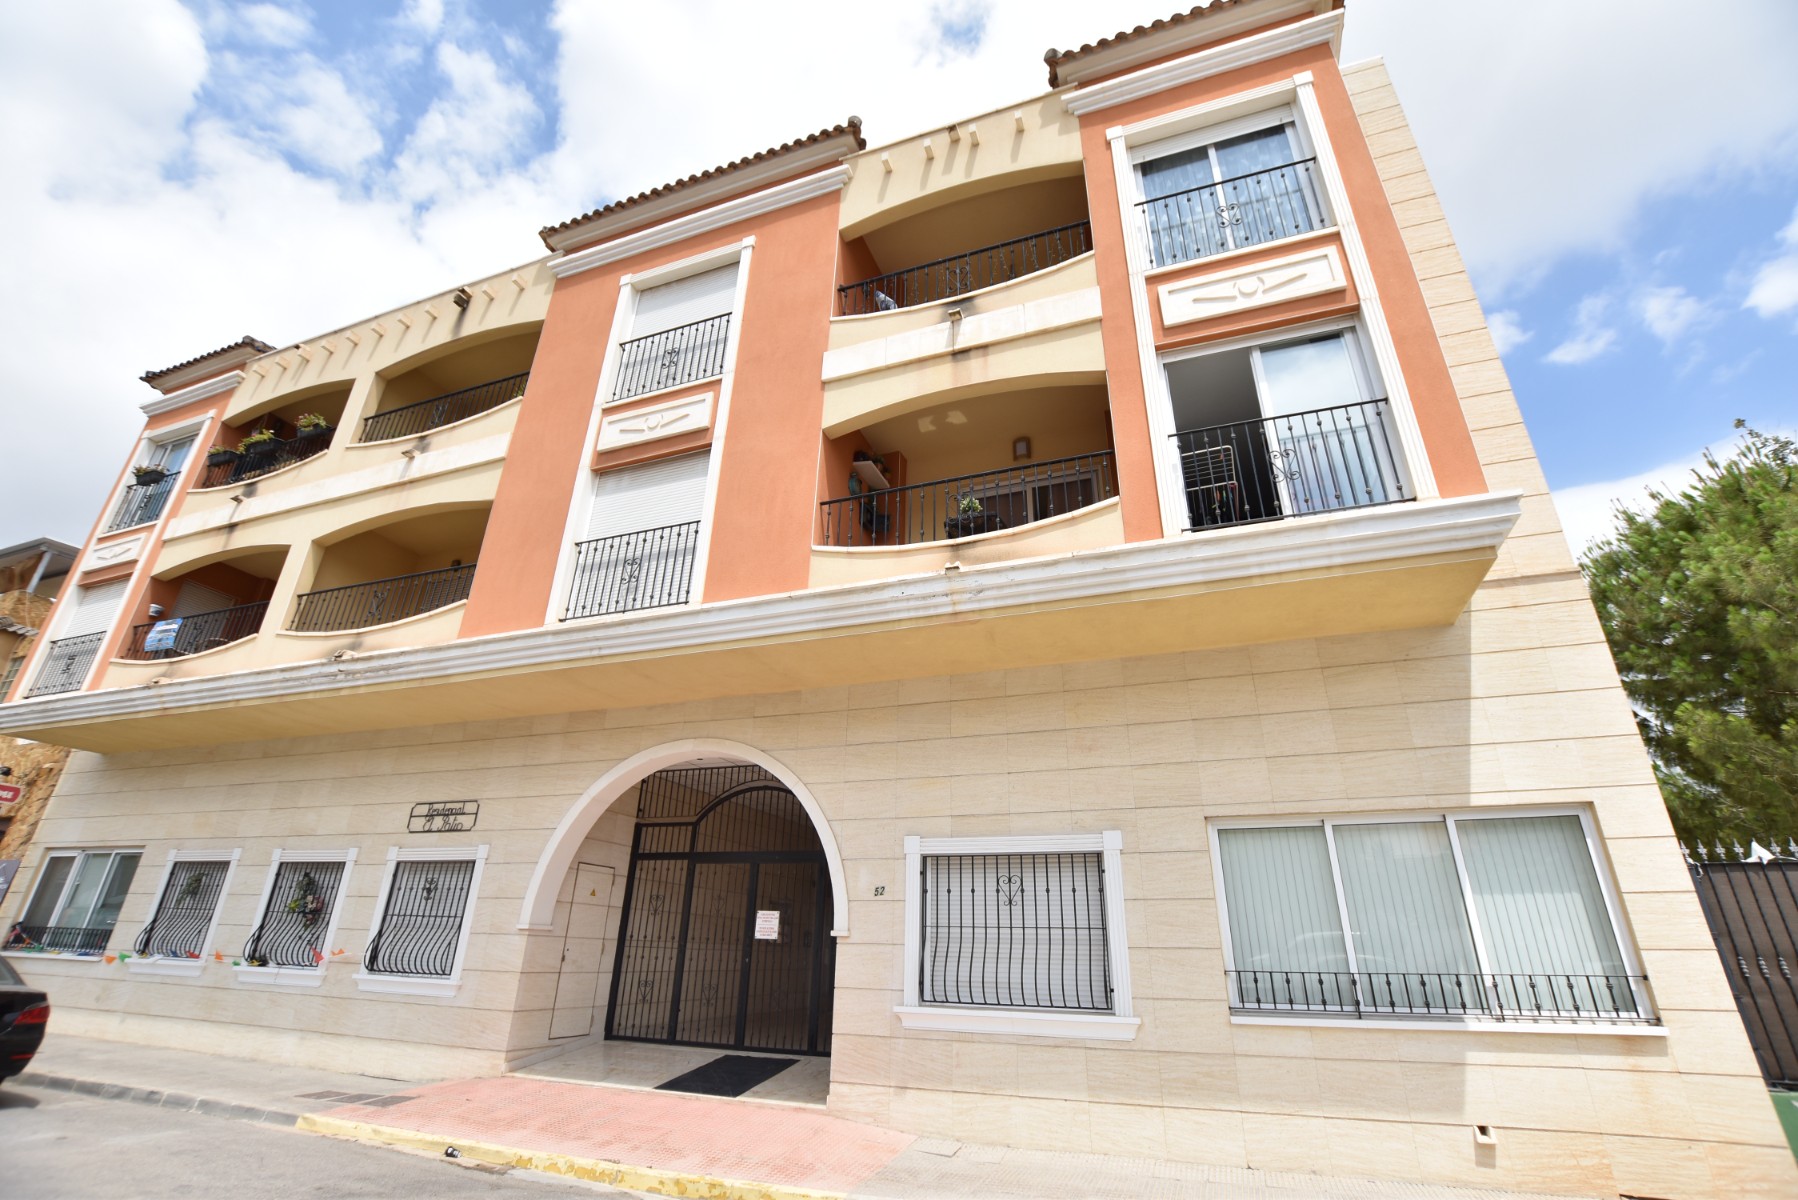 For sale: 2 bedroom apartment / flat in Algorfa, Costa Blanca